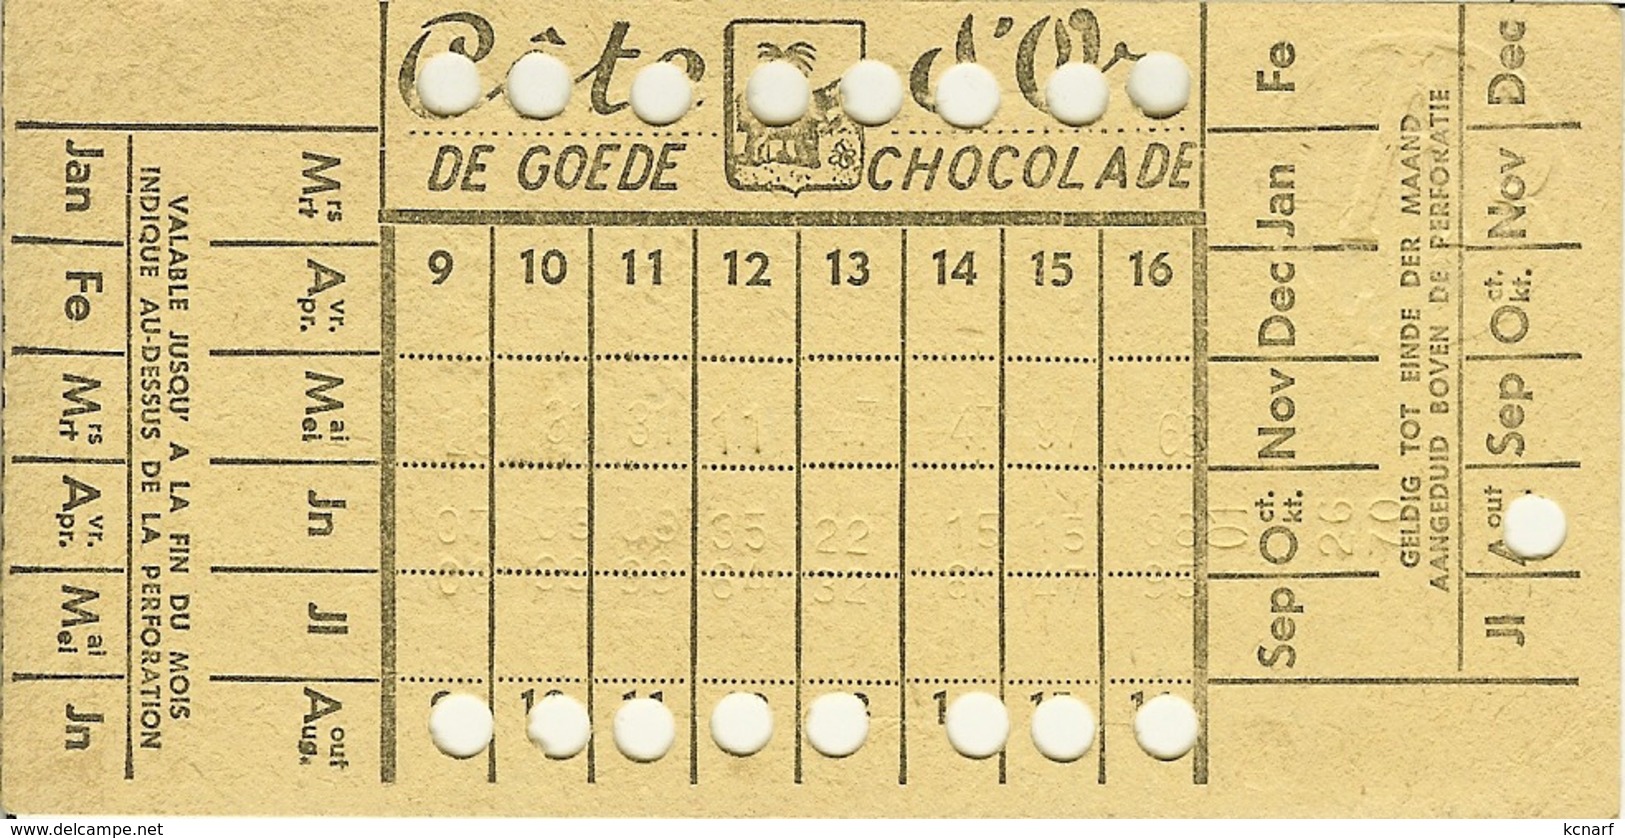 Carte De 16 Voyages Urbains S.T.I.B / M.I.V.B Avec Pub Le Bon Chocolat ôte D'Or / De Goede Chocolade . - Europa